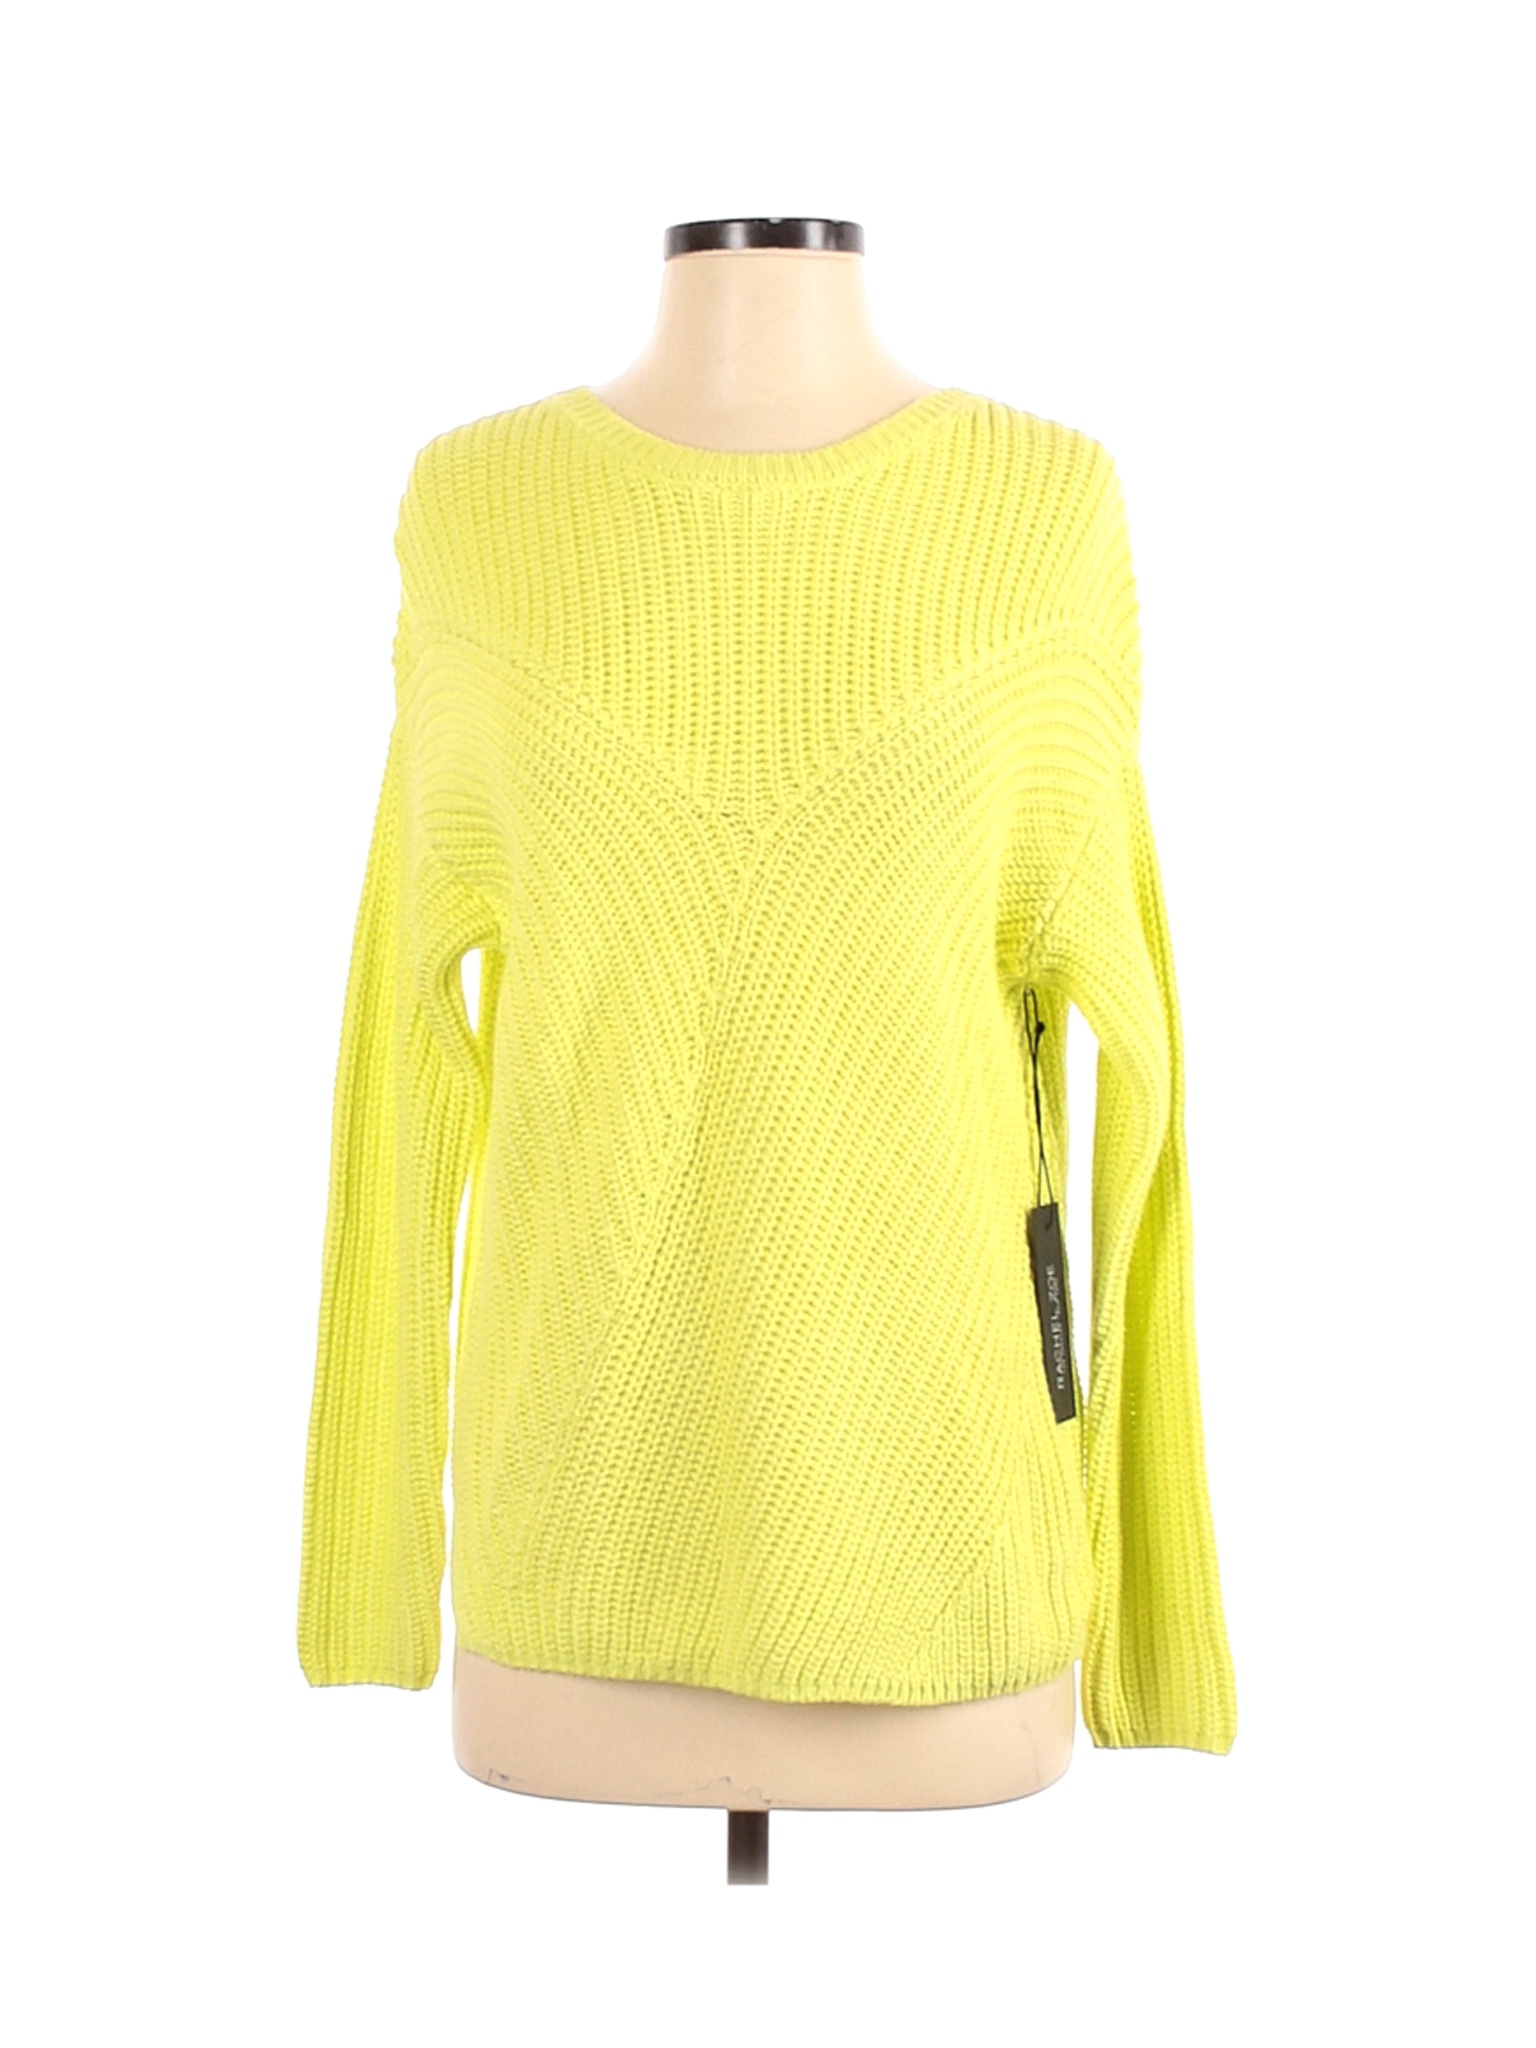 NWT Rachel Zoe Women Yellow Pullover Sweater XS | eBay